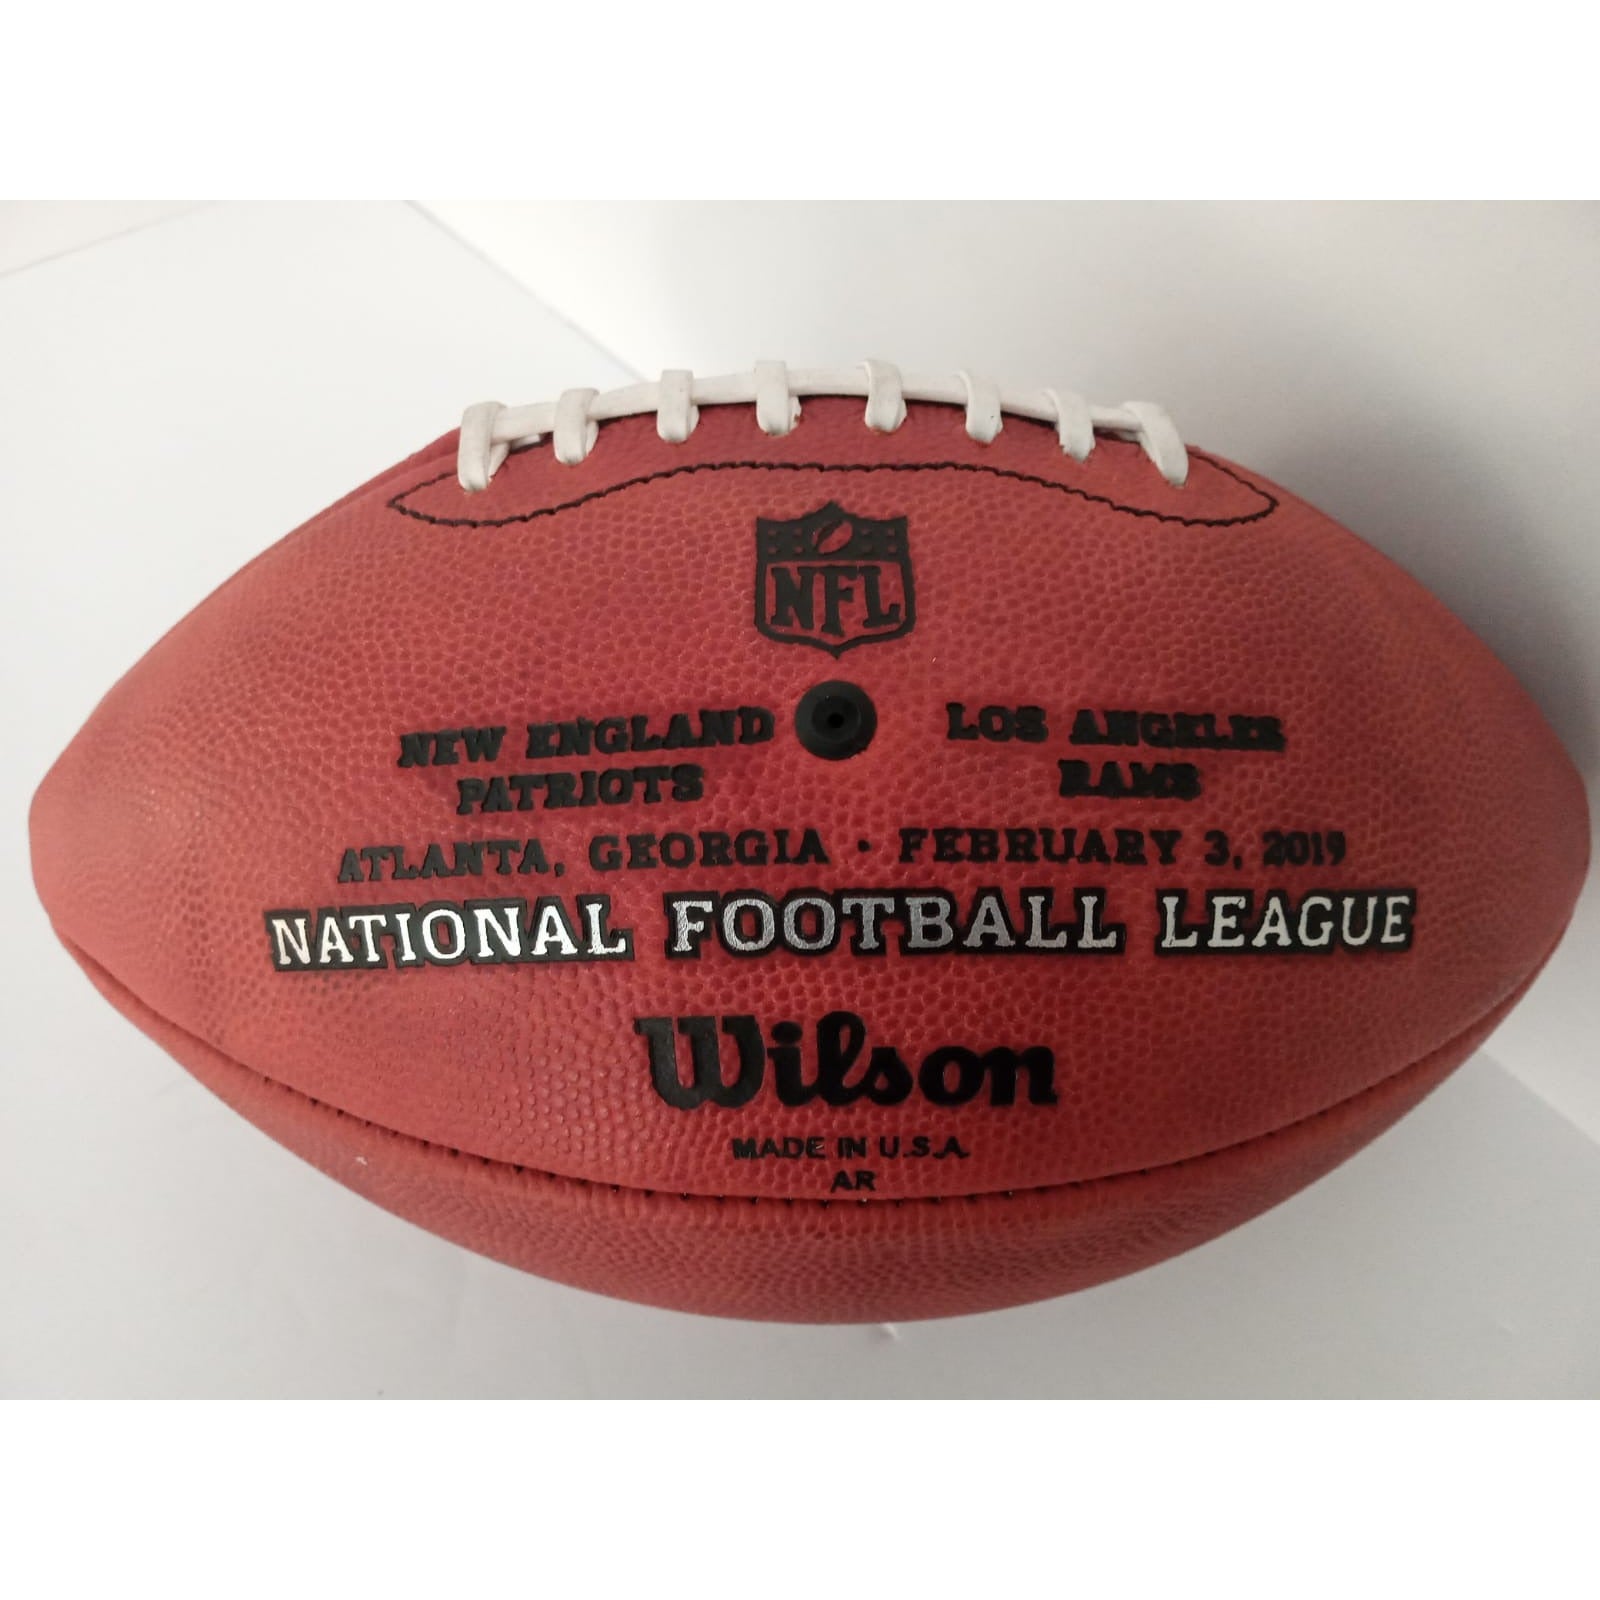 Tom Brady Julian Edelman Rob Gronkowski NFL Super Bowl game football signed with proof